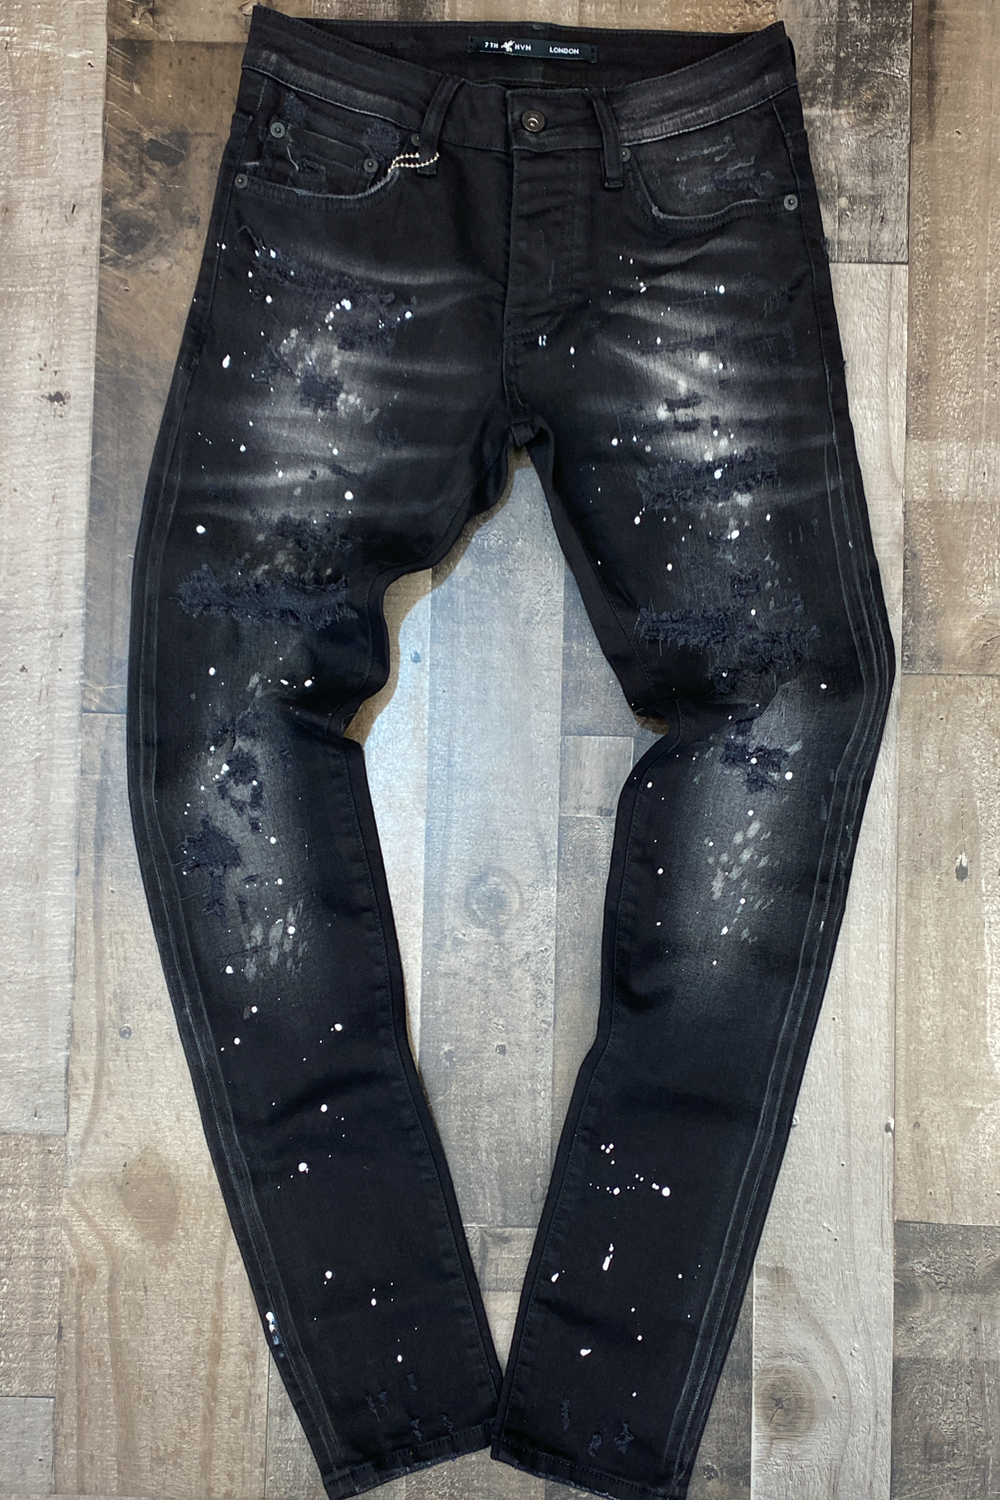 7th hvn- paint splattered jeans (black)